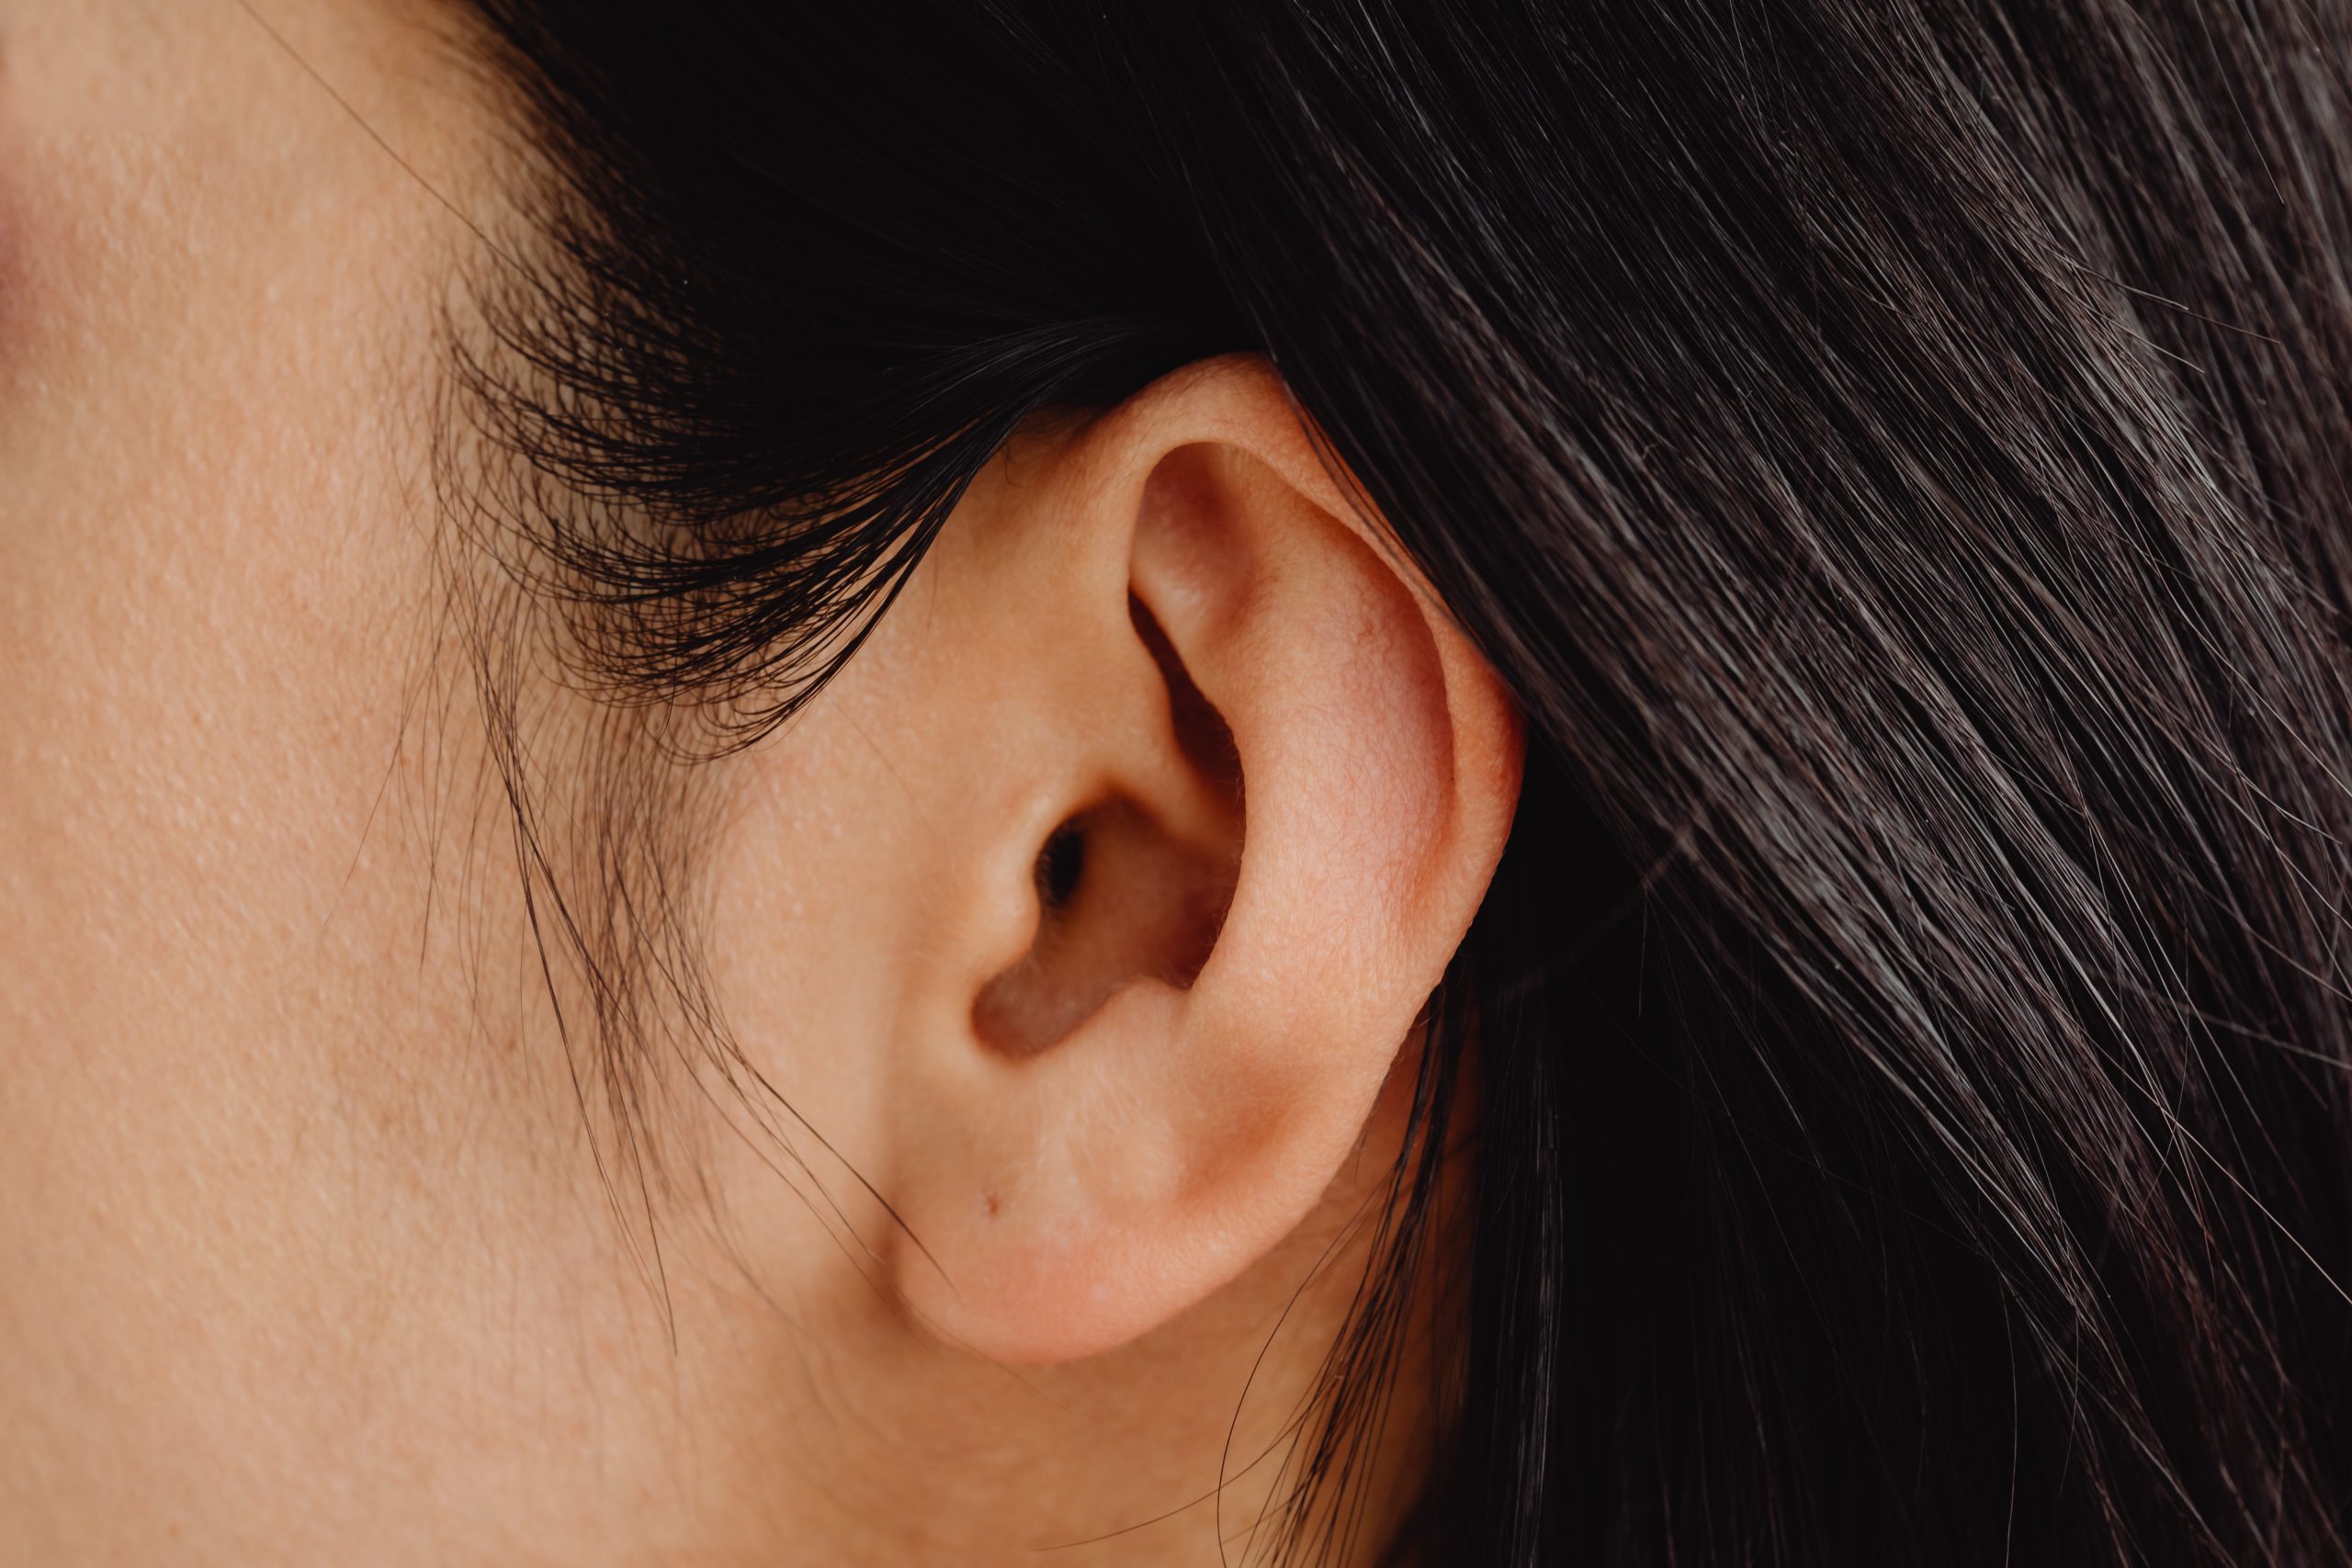 A closeup of a woman's ear.